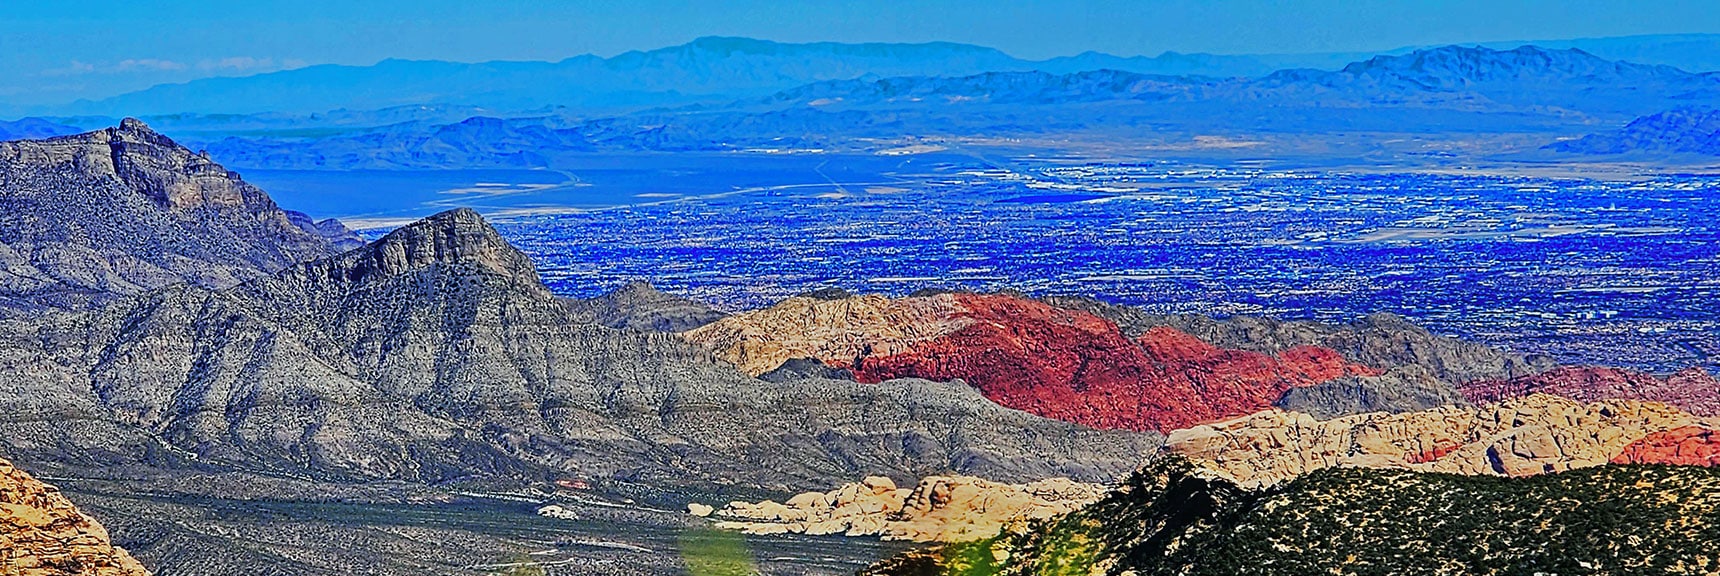 Calico Hills. Las Vegas Valley Beyond. | Mini Matterhorn Pinnacle | Wilson Ridge | Lovell Canyon, Nevada